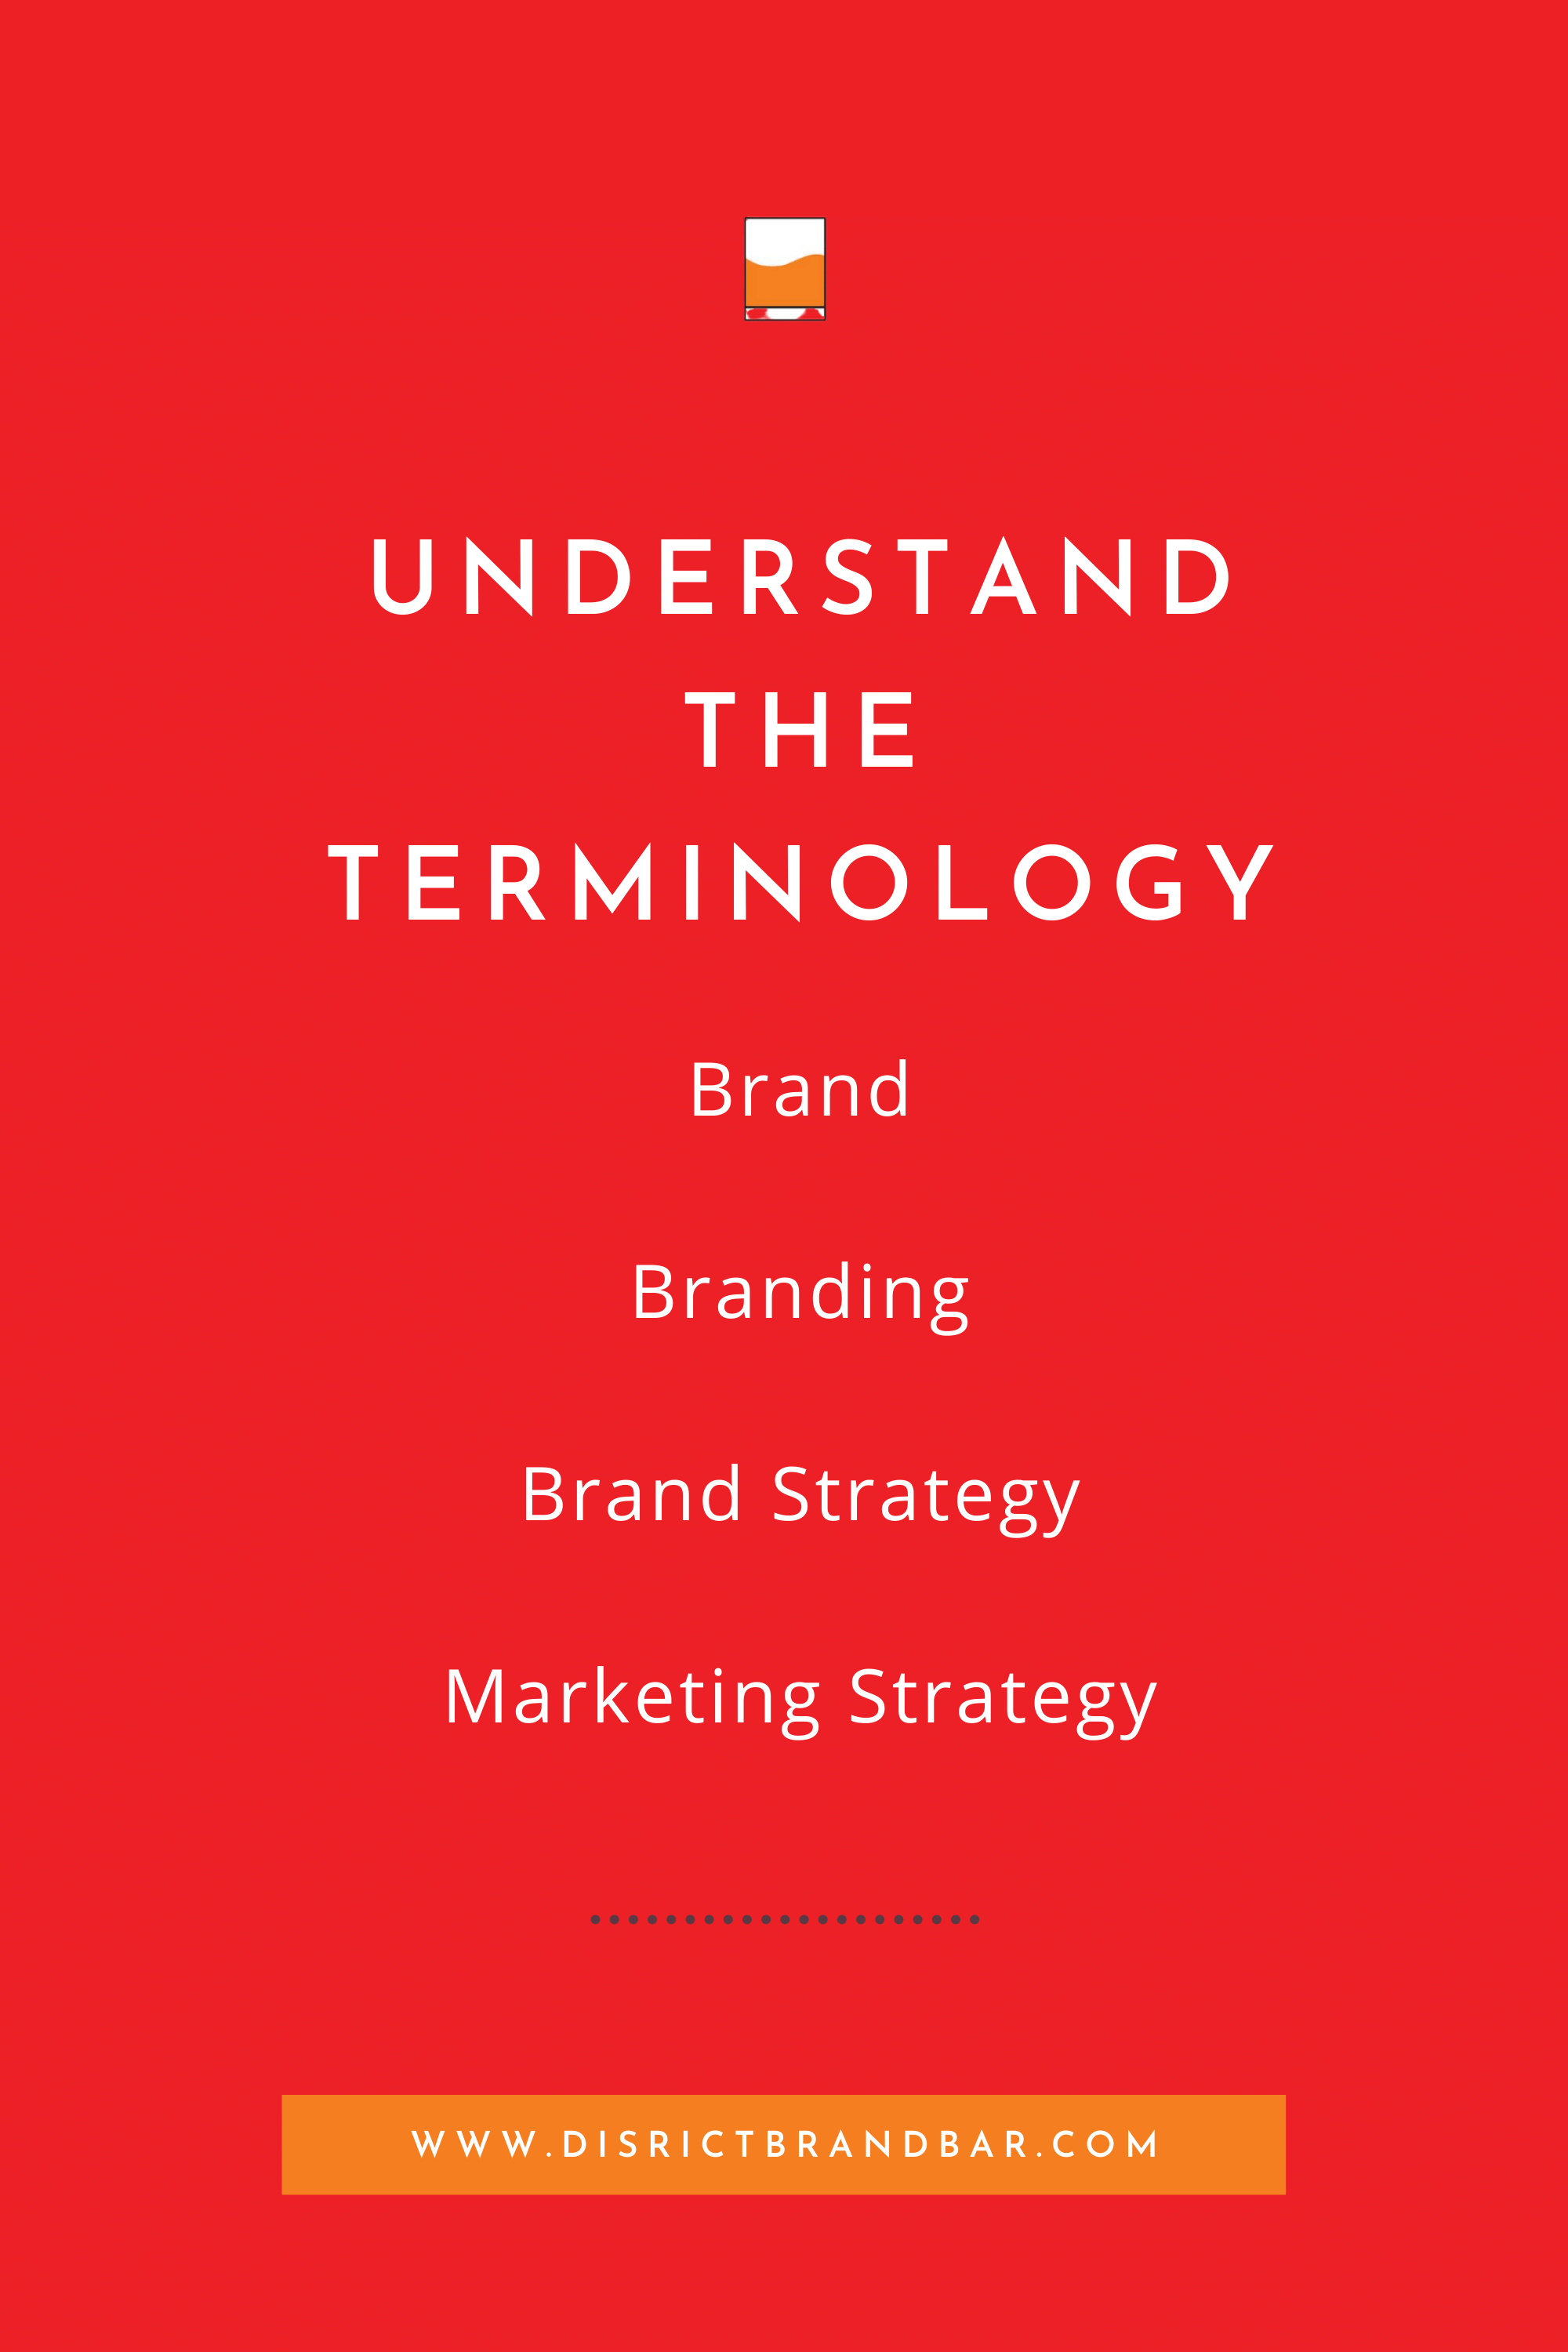 Understanding Brand, Branding, Brand Strategy and Marketing Strategy